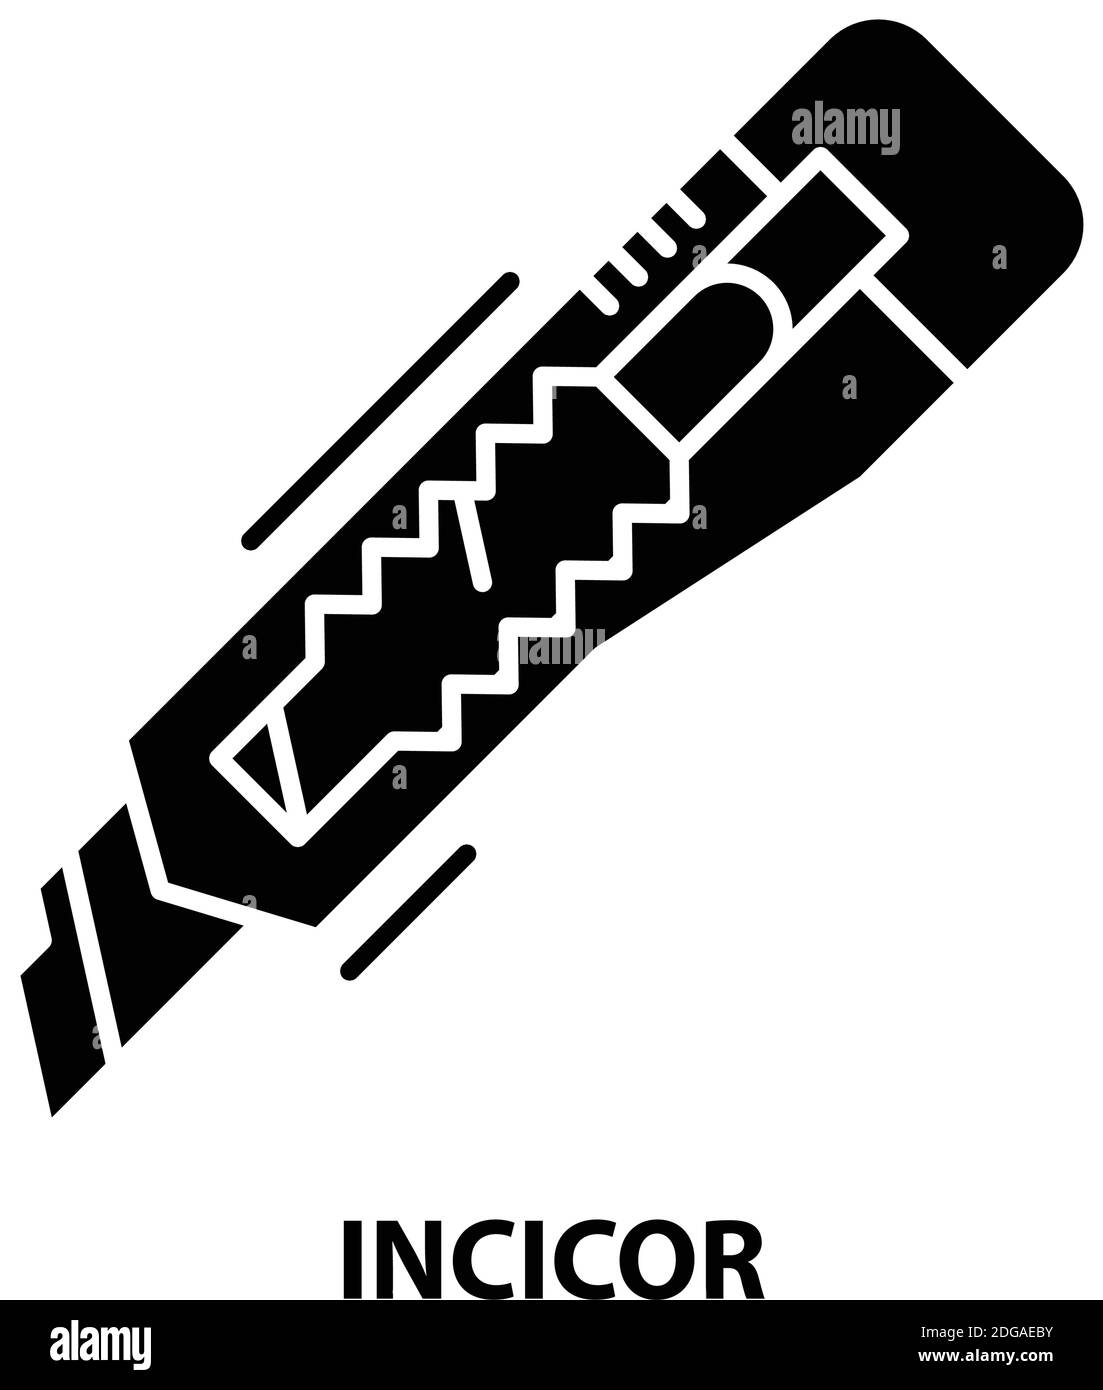 incicor icon, black vector sign with editable strokes, concept illustration Stock Vector